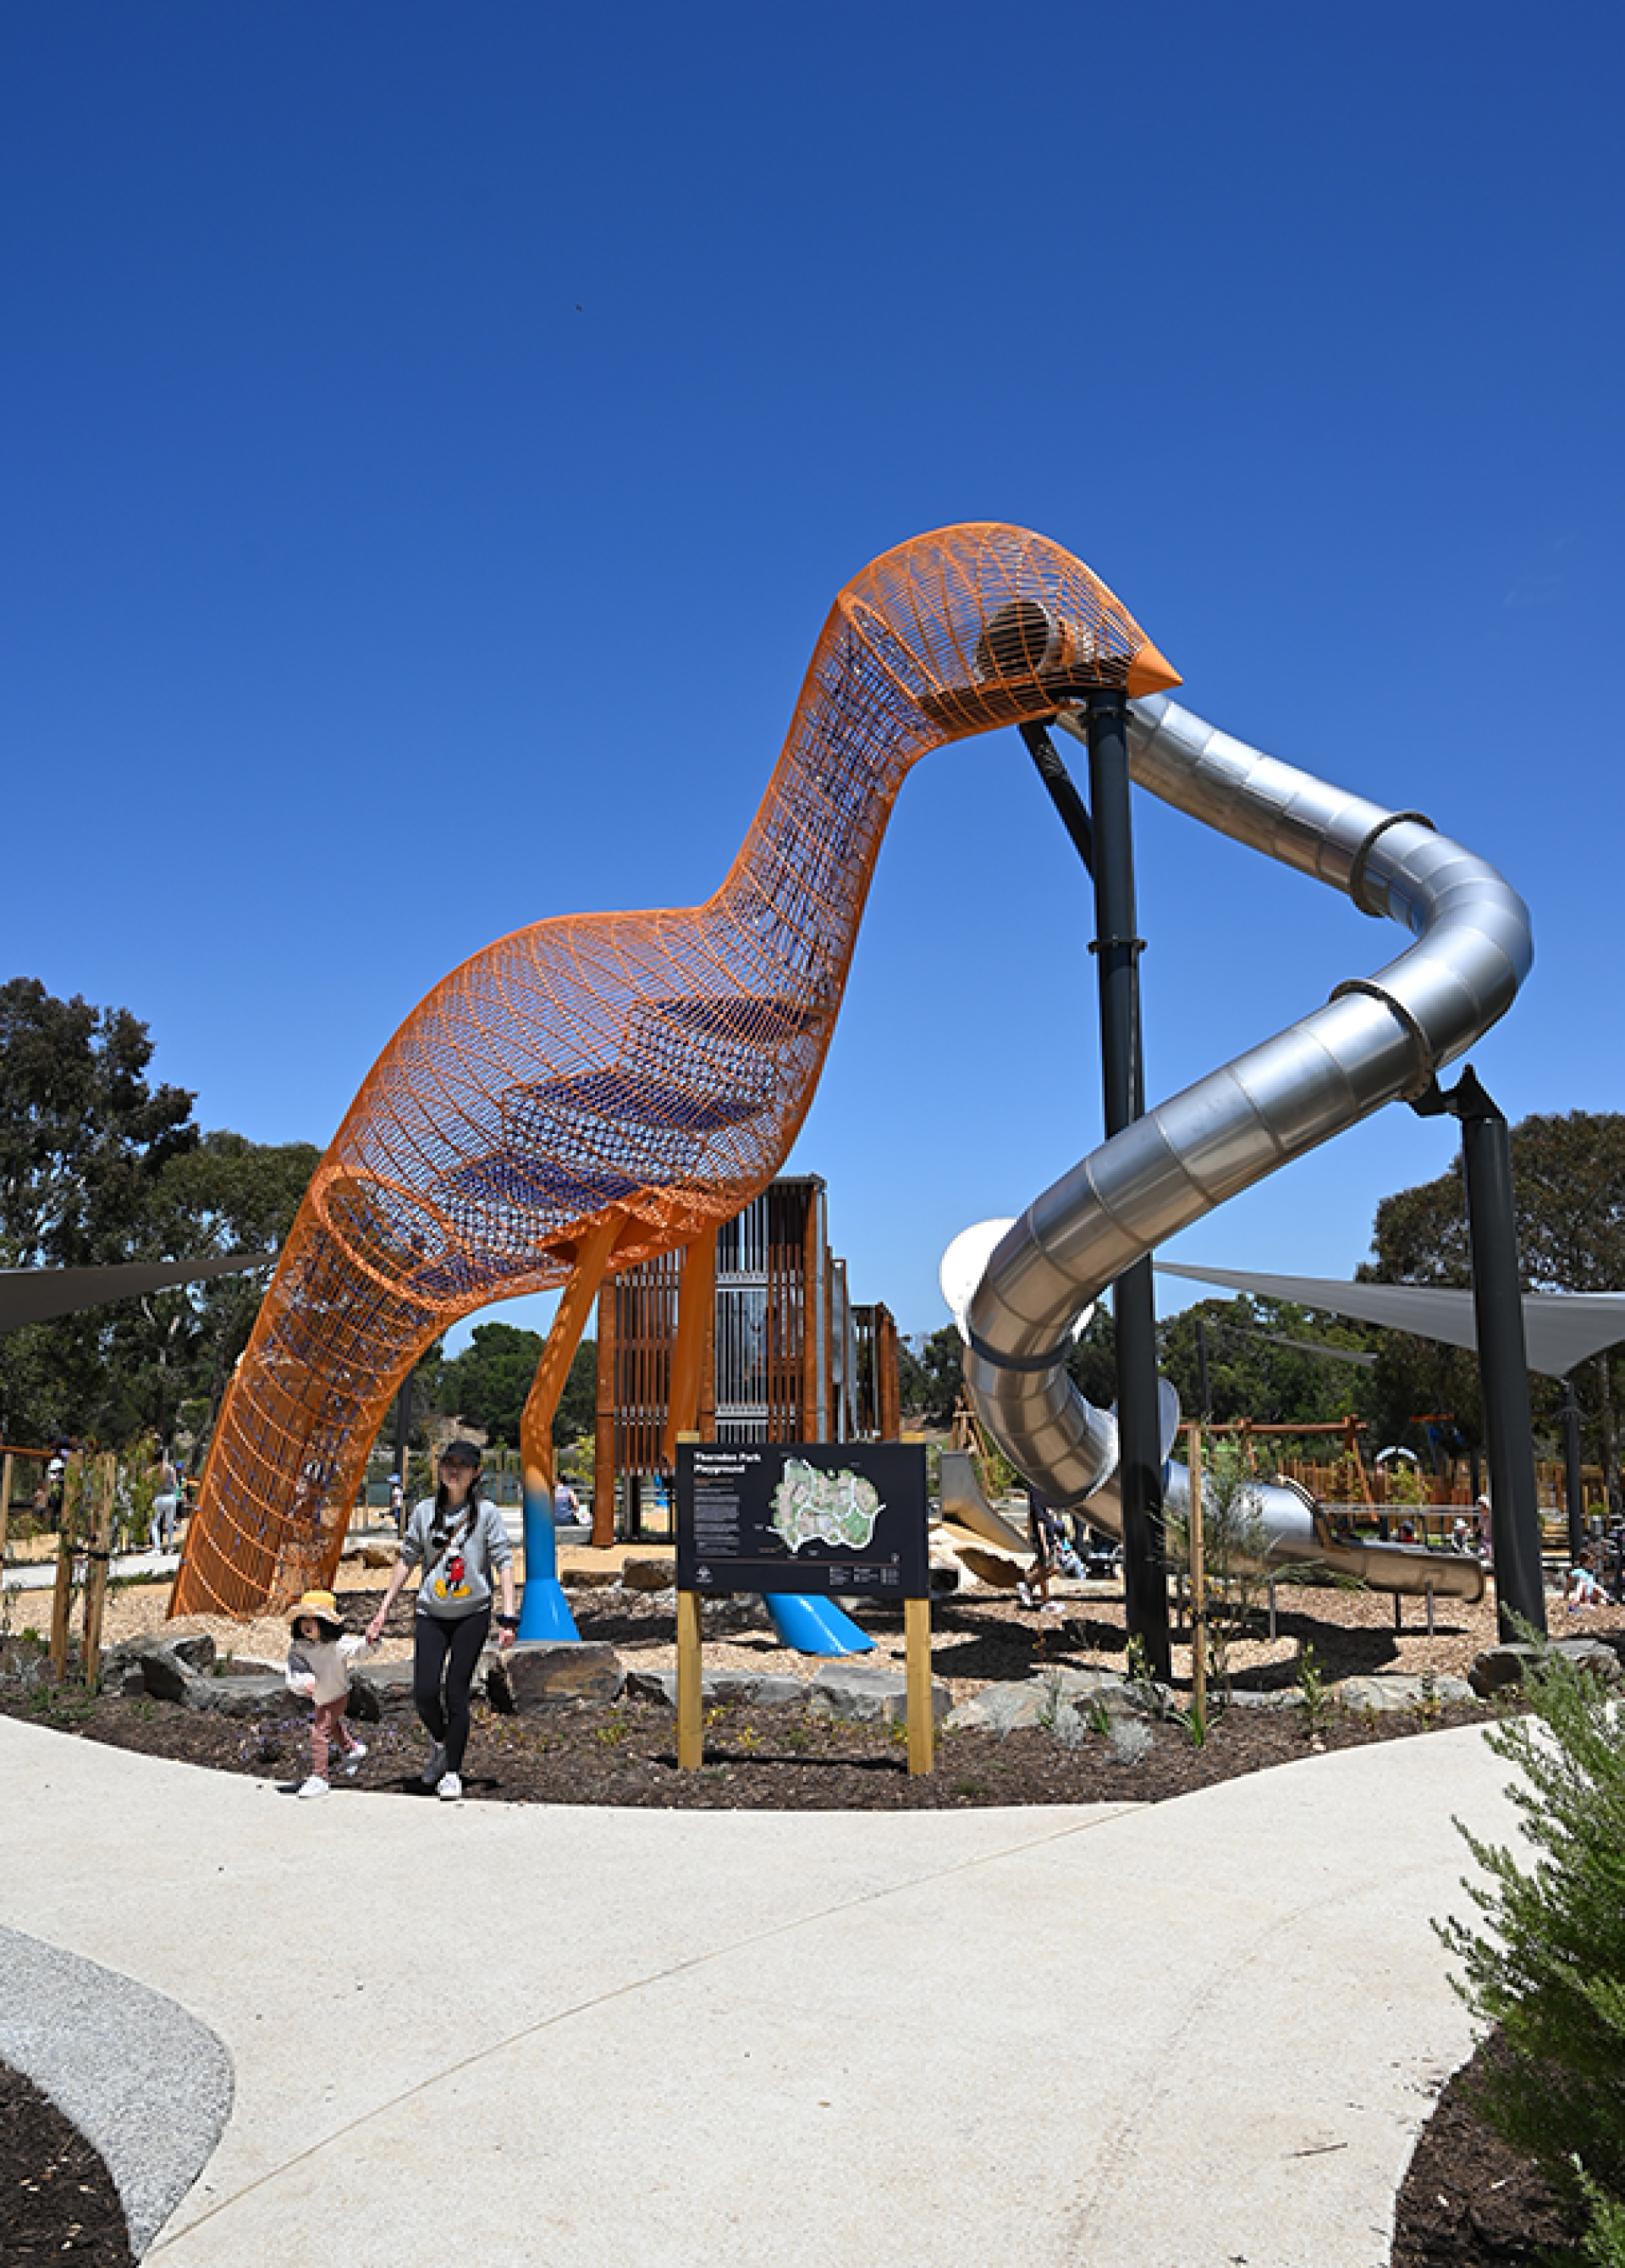 Giant Heron Bird Slide at Thorndon Park Playground.